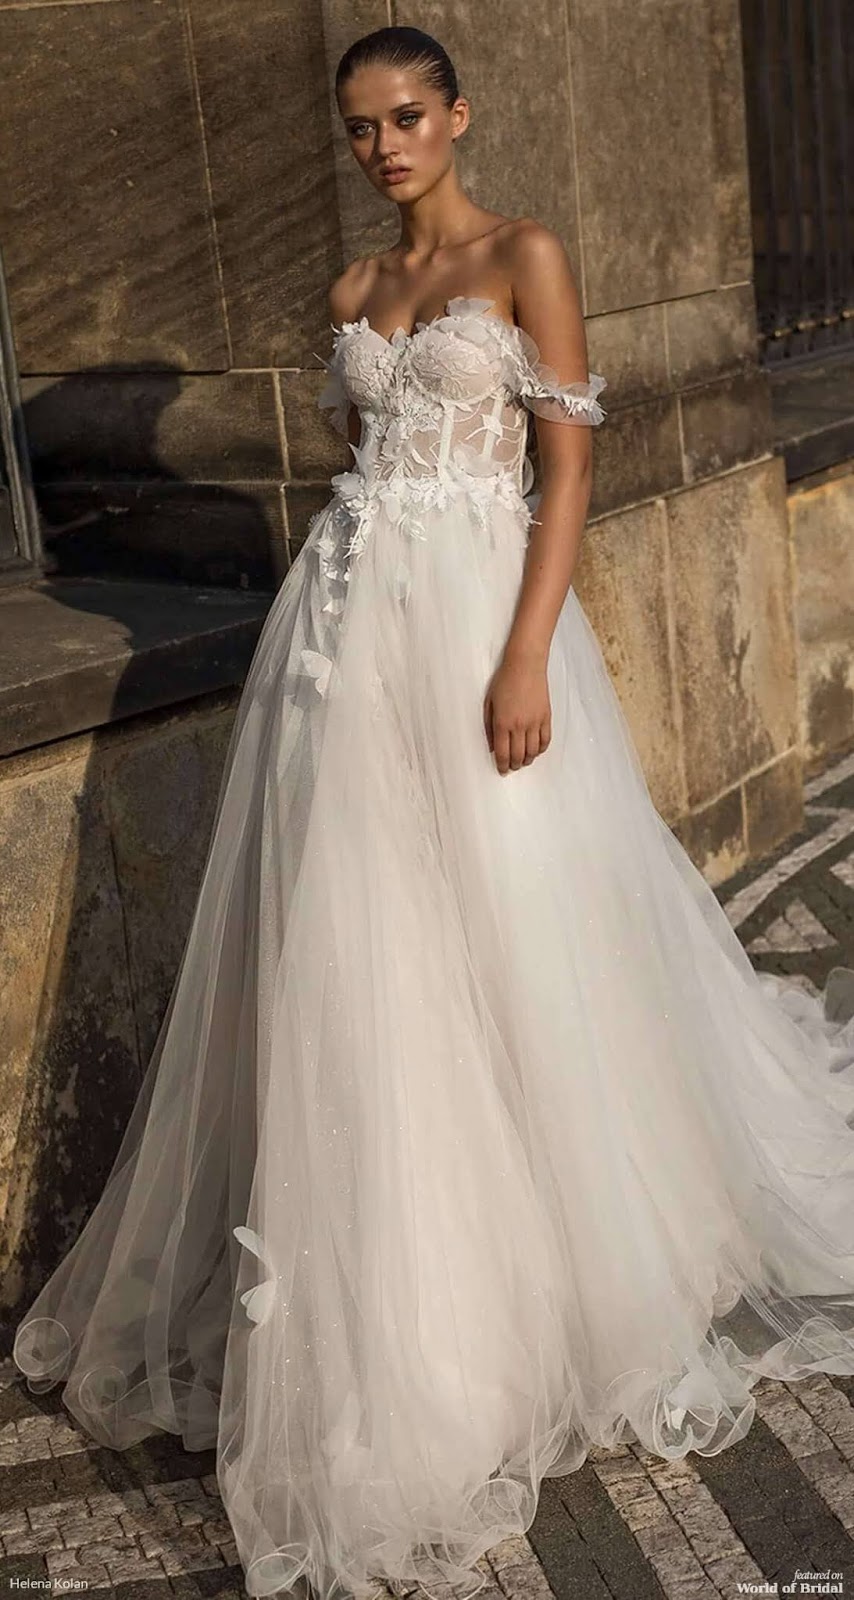  Helena  Kolan  2019  Wedding  Dresses  World of Bridal 